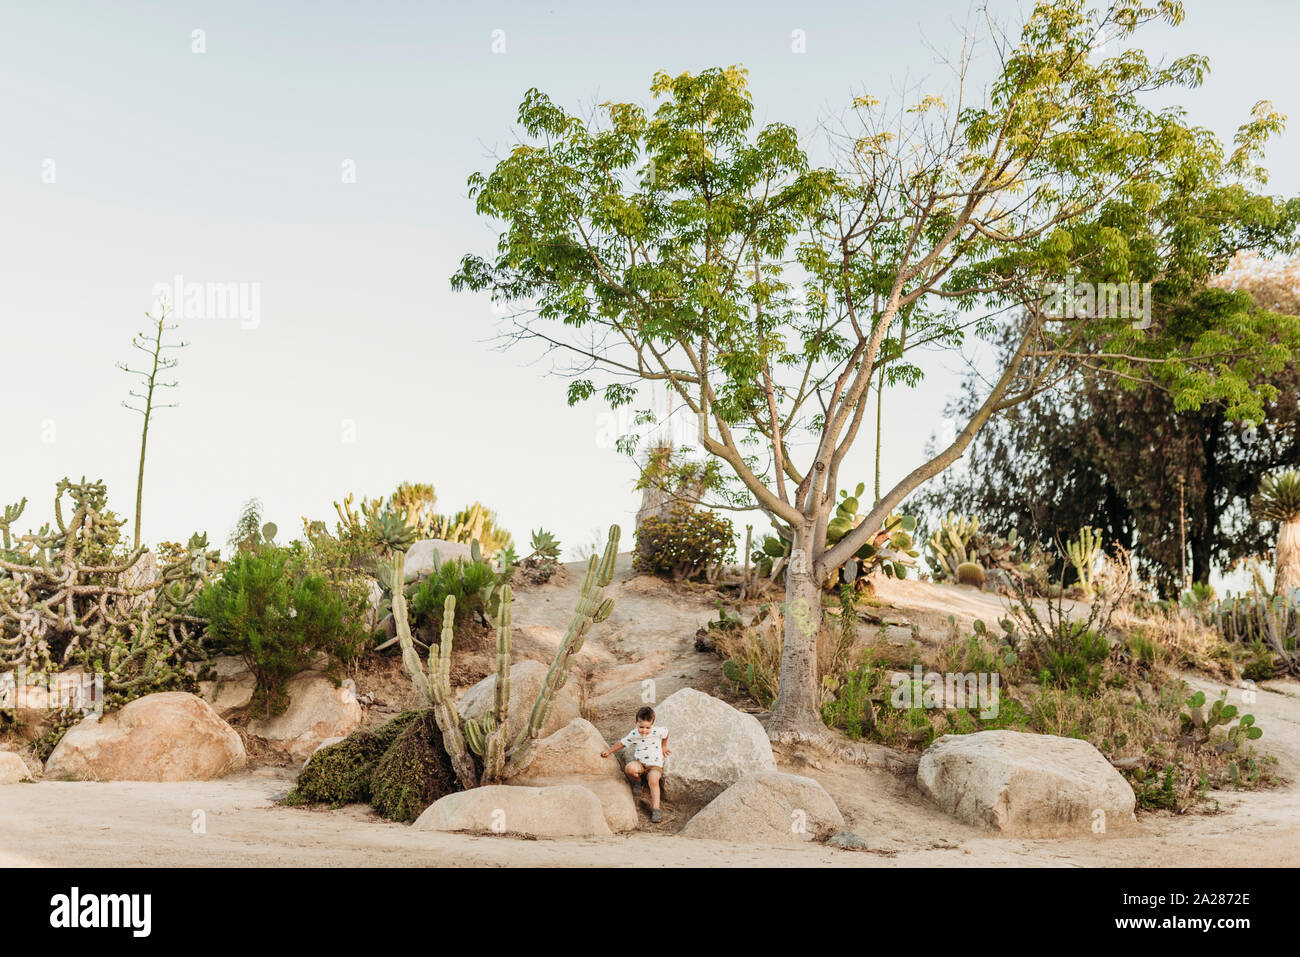 Landscape of cactus garden with preschool aged boy climbing rocks Stock Photo